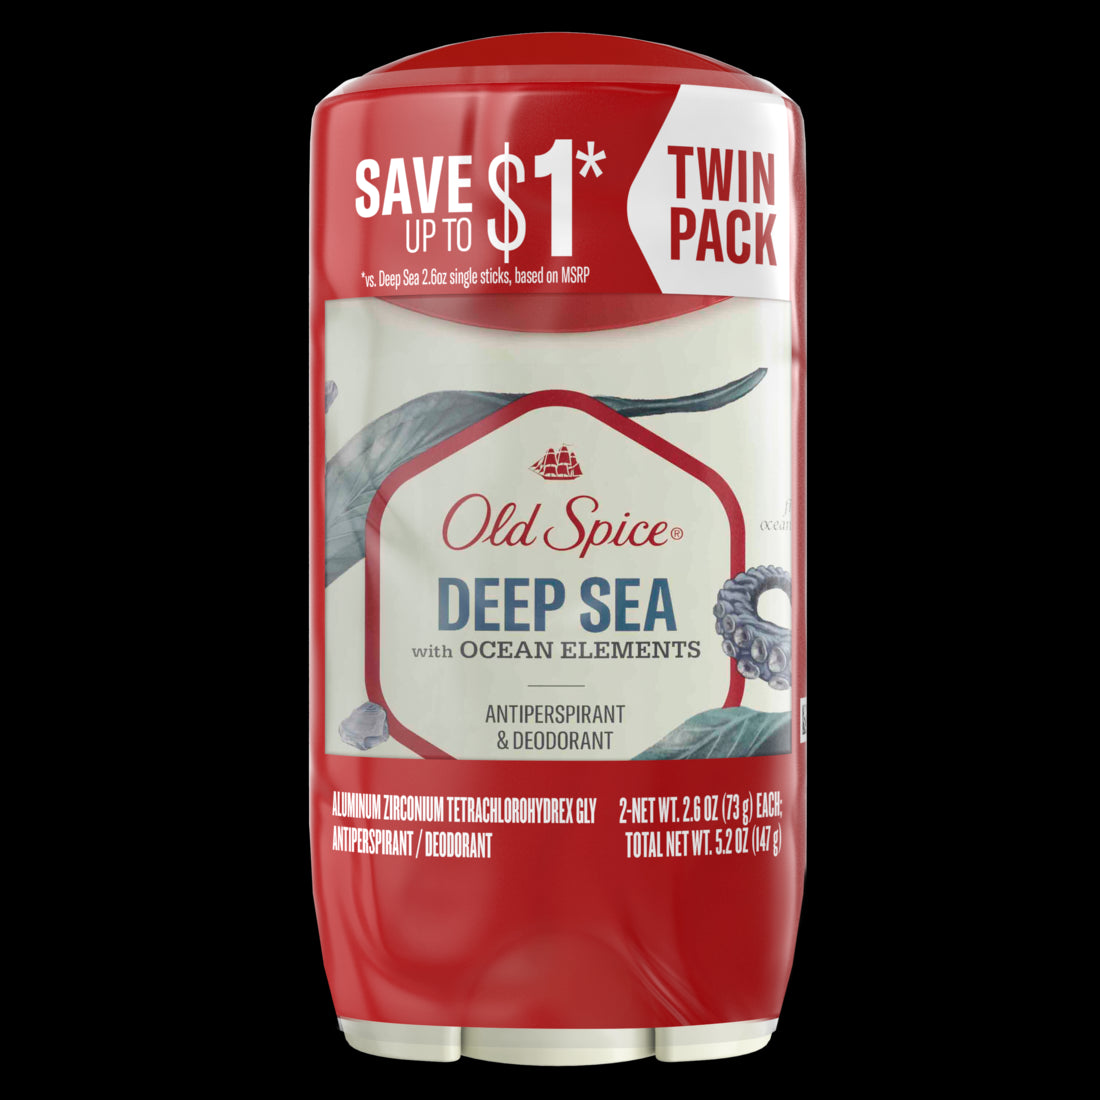 Old Spice Men's Antiperspirant & Deodorant Deep Sea with Ocean Elements Twin Pack -  2.6oz/6pk